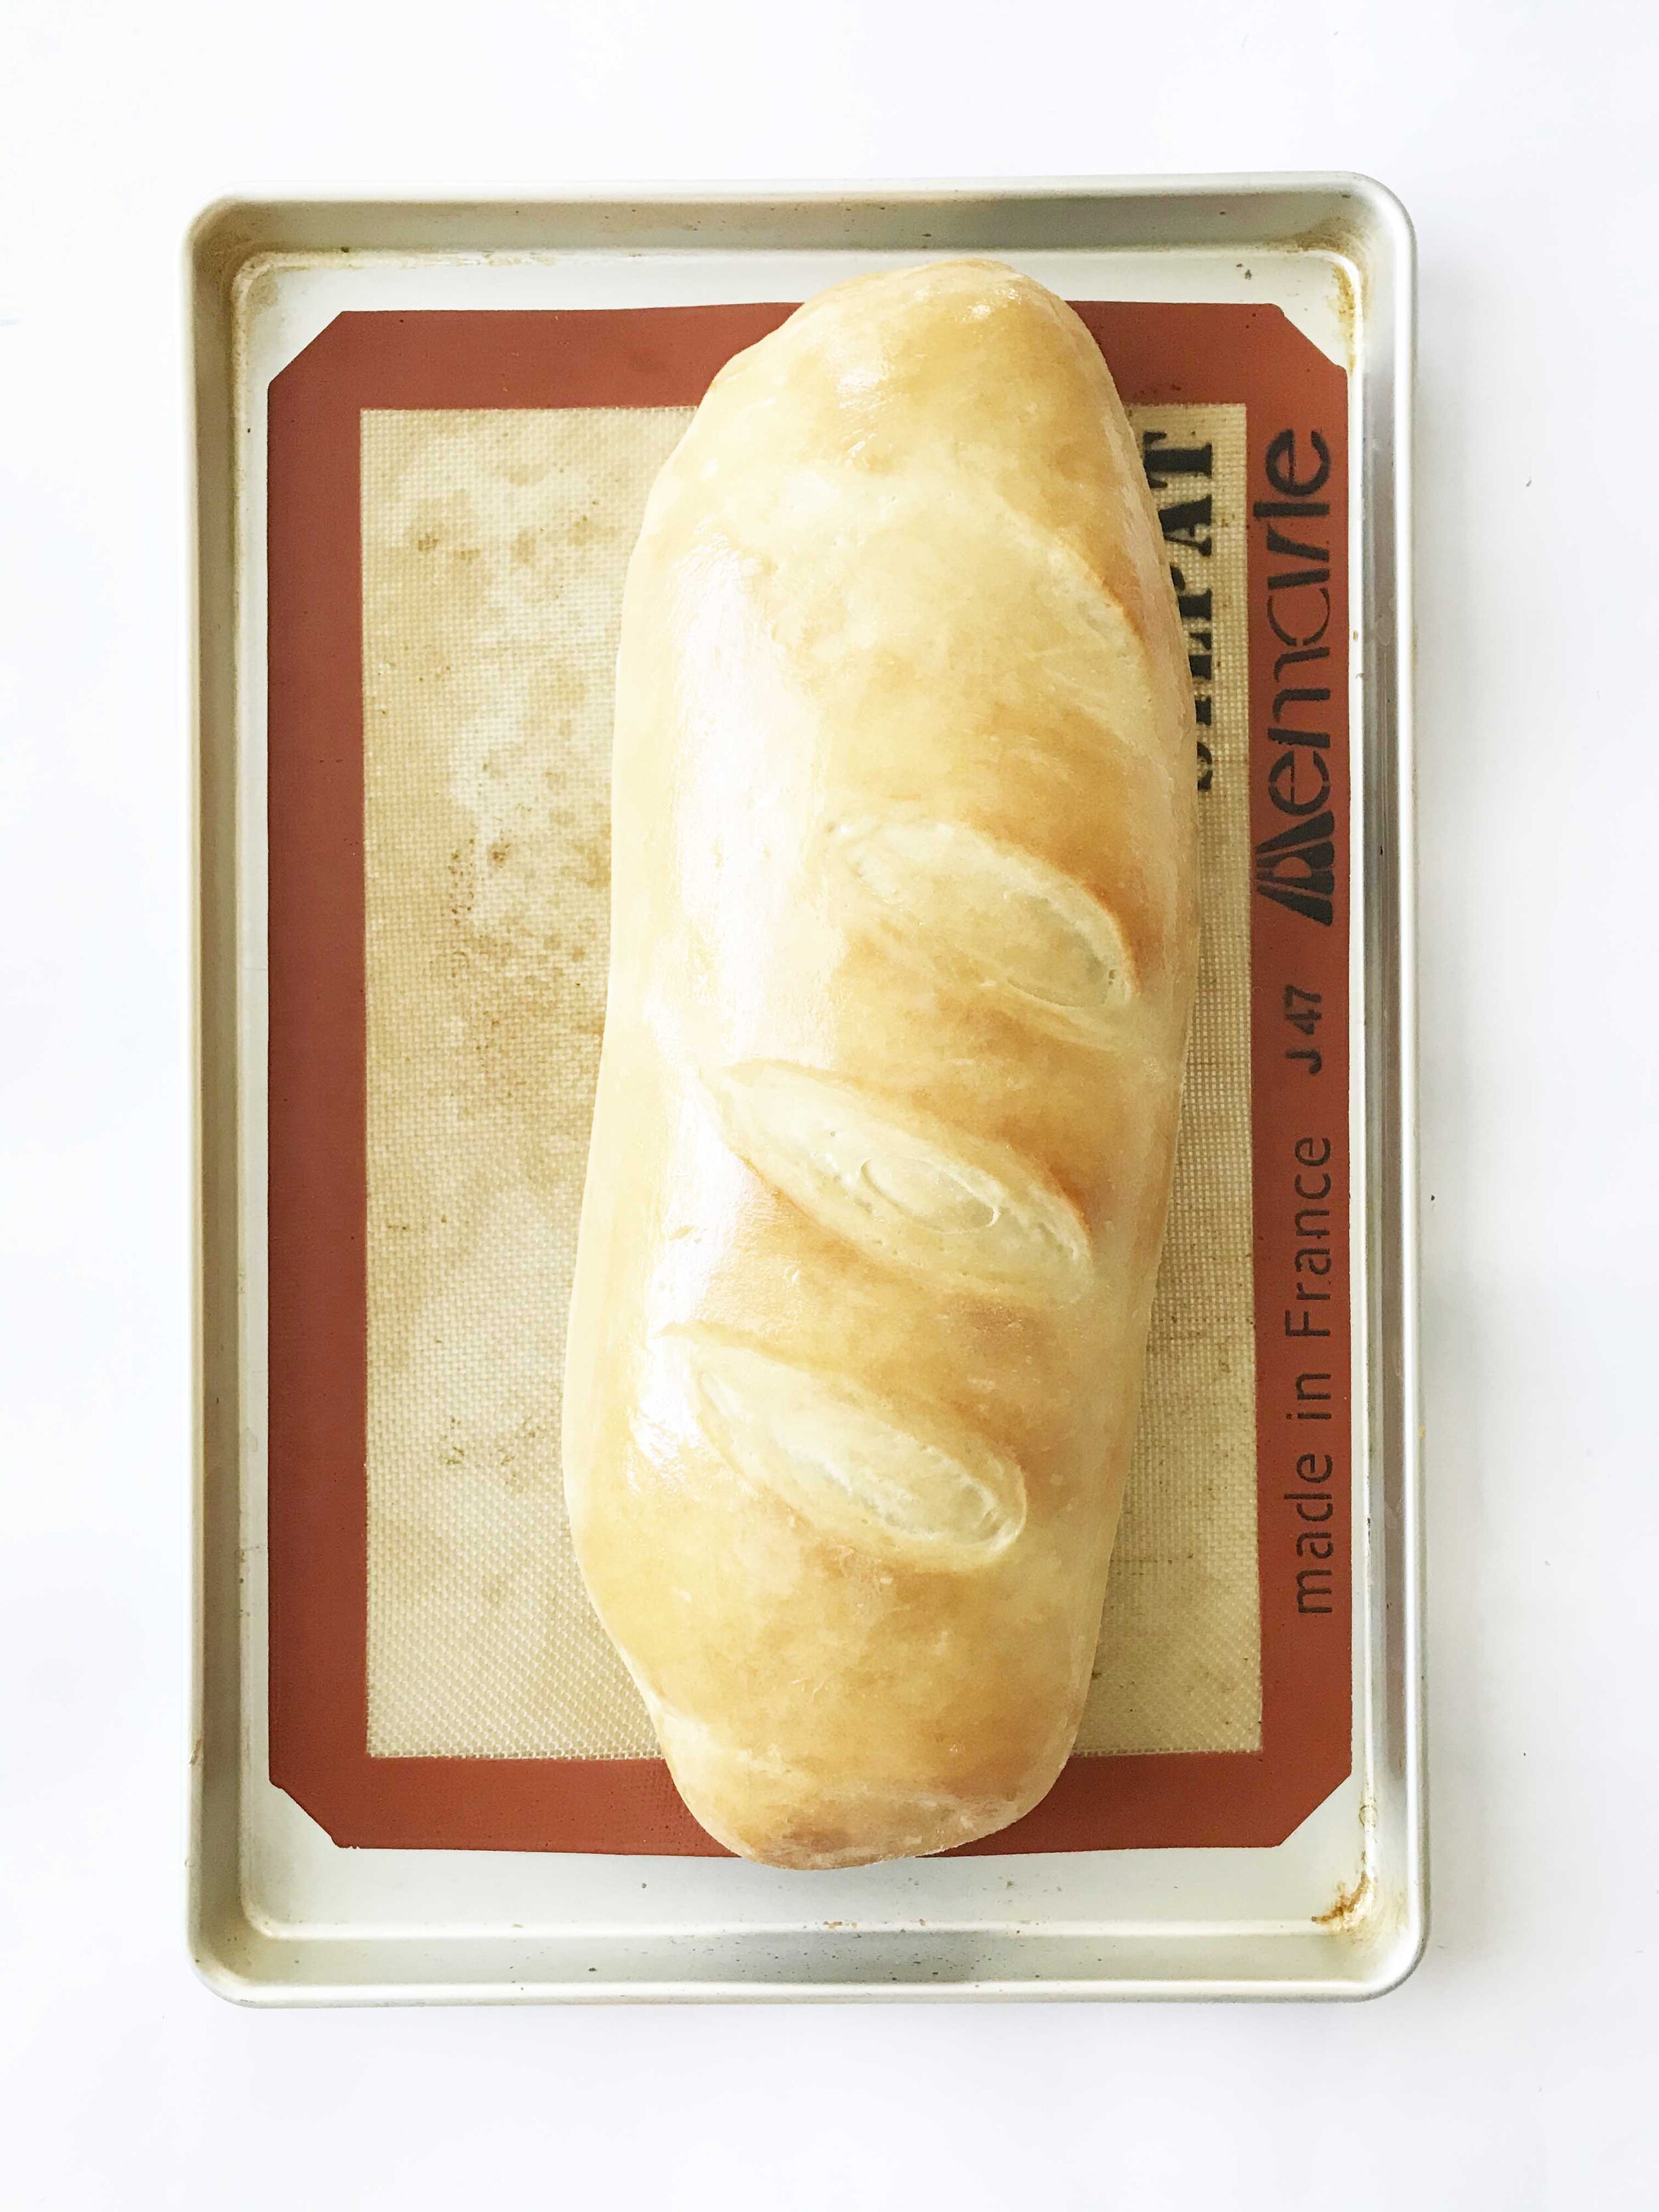 french-bread8.jpg